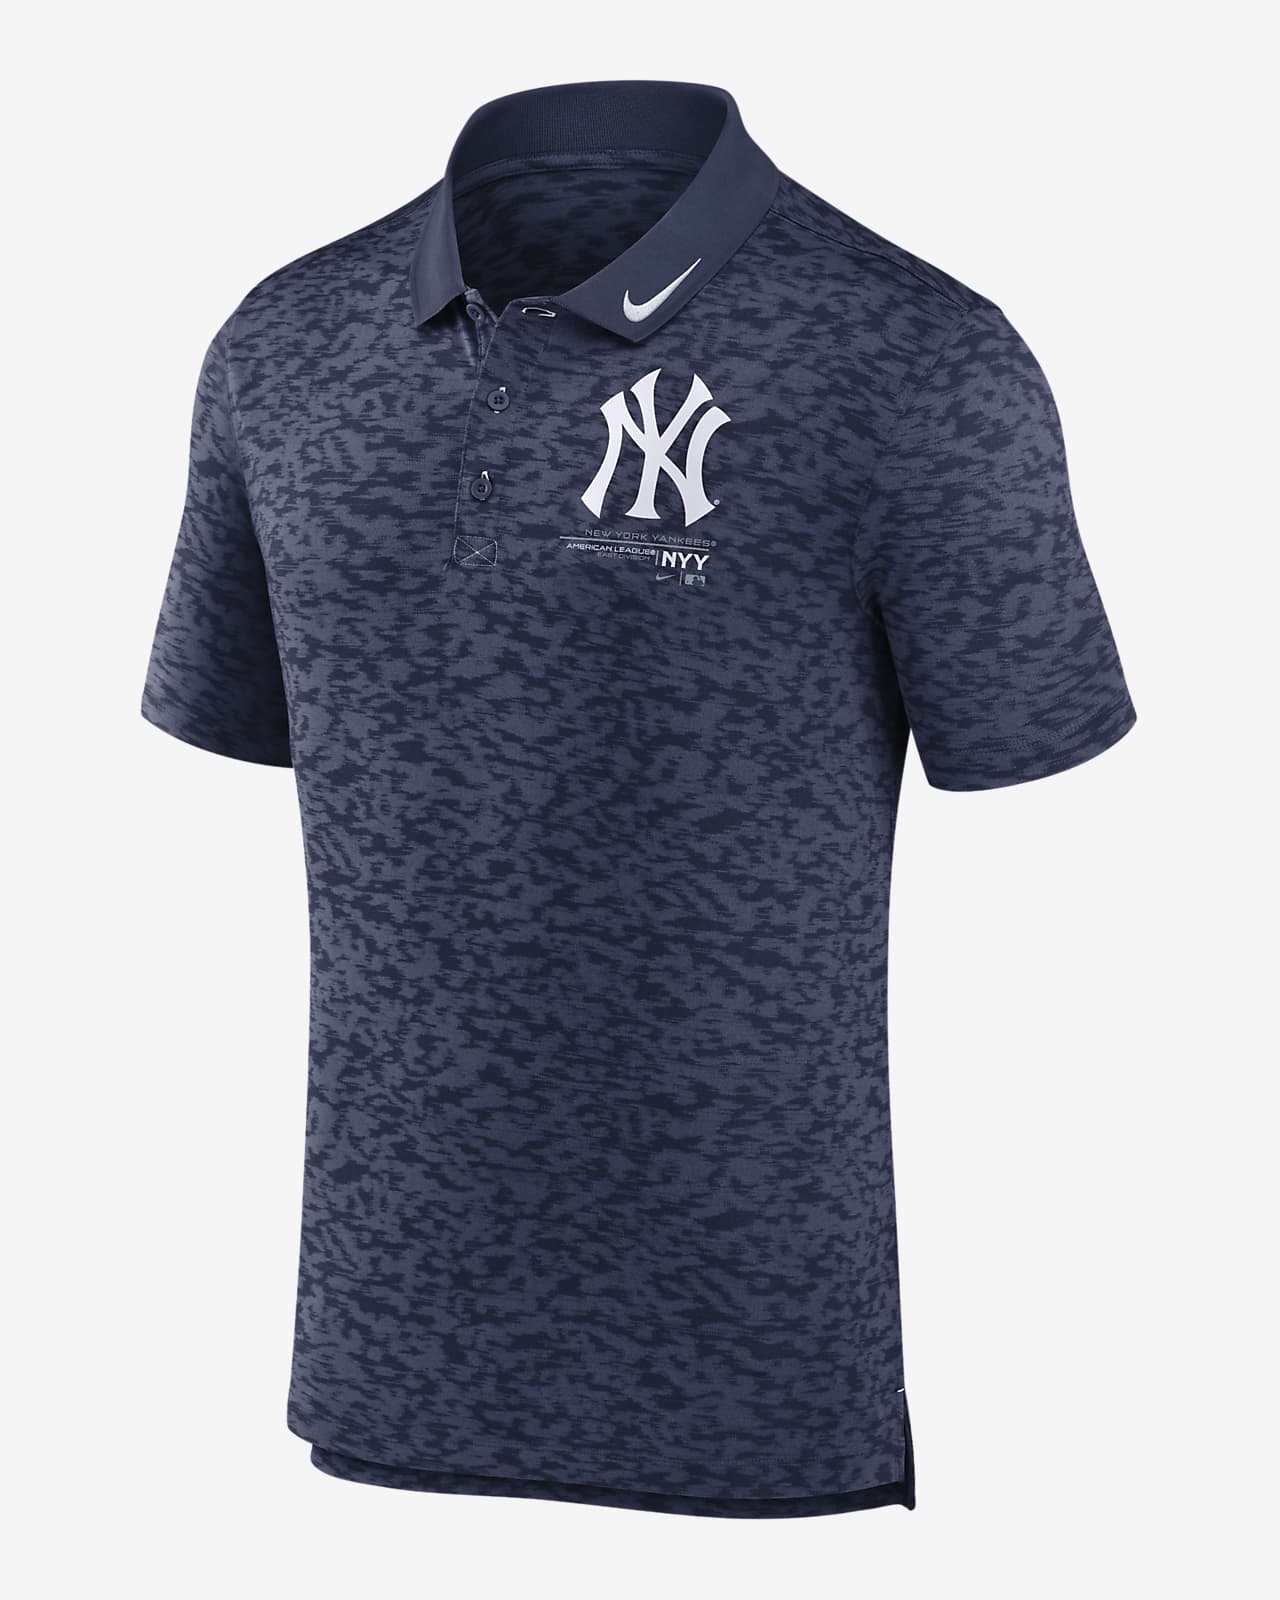 Nike, Shirts, Nike New York Yankees Blue Golf Polo Shirt